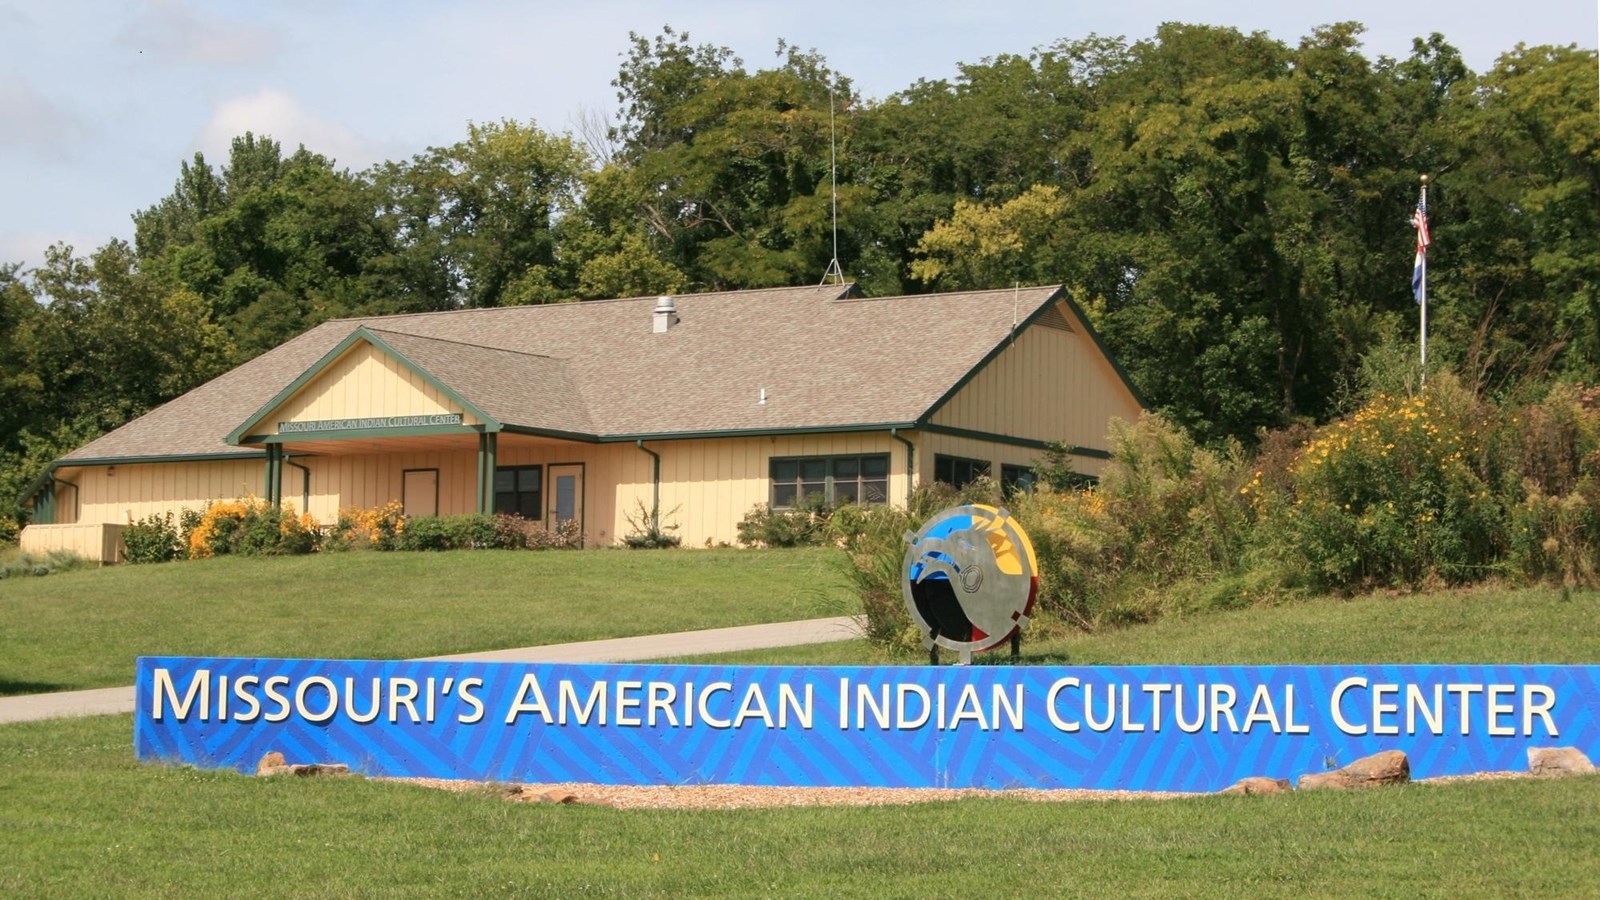 Missouri’s American Indian Cultural Center